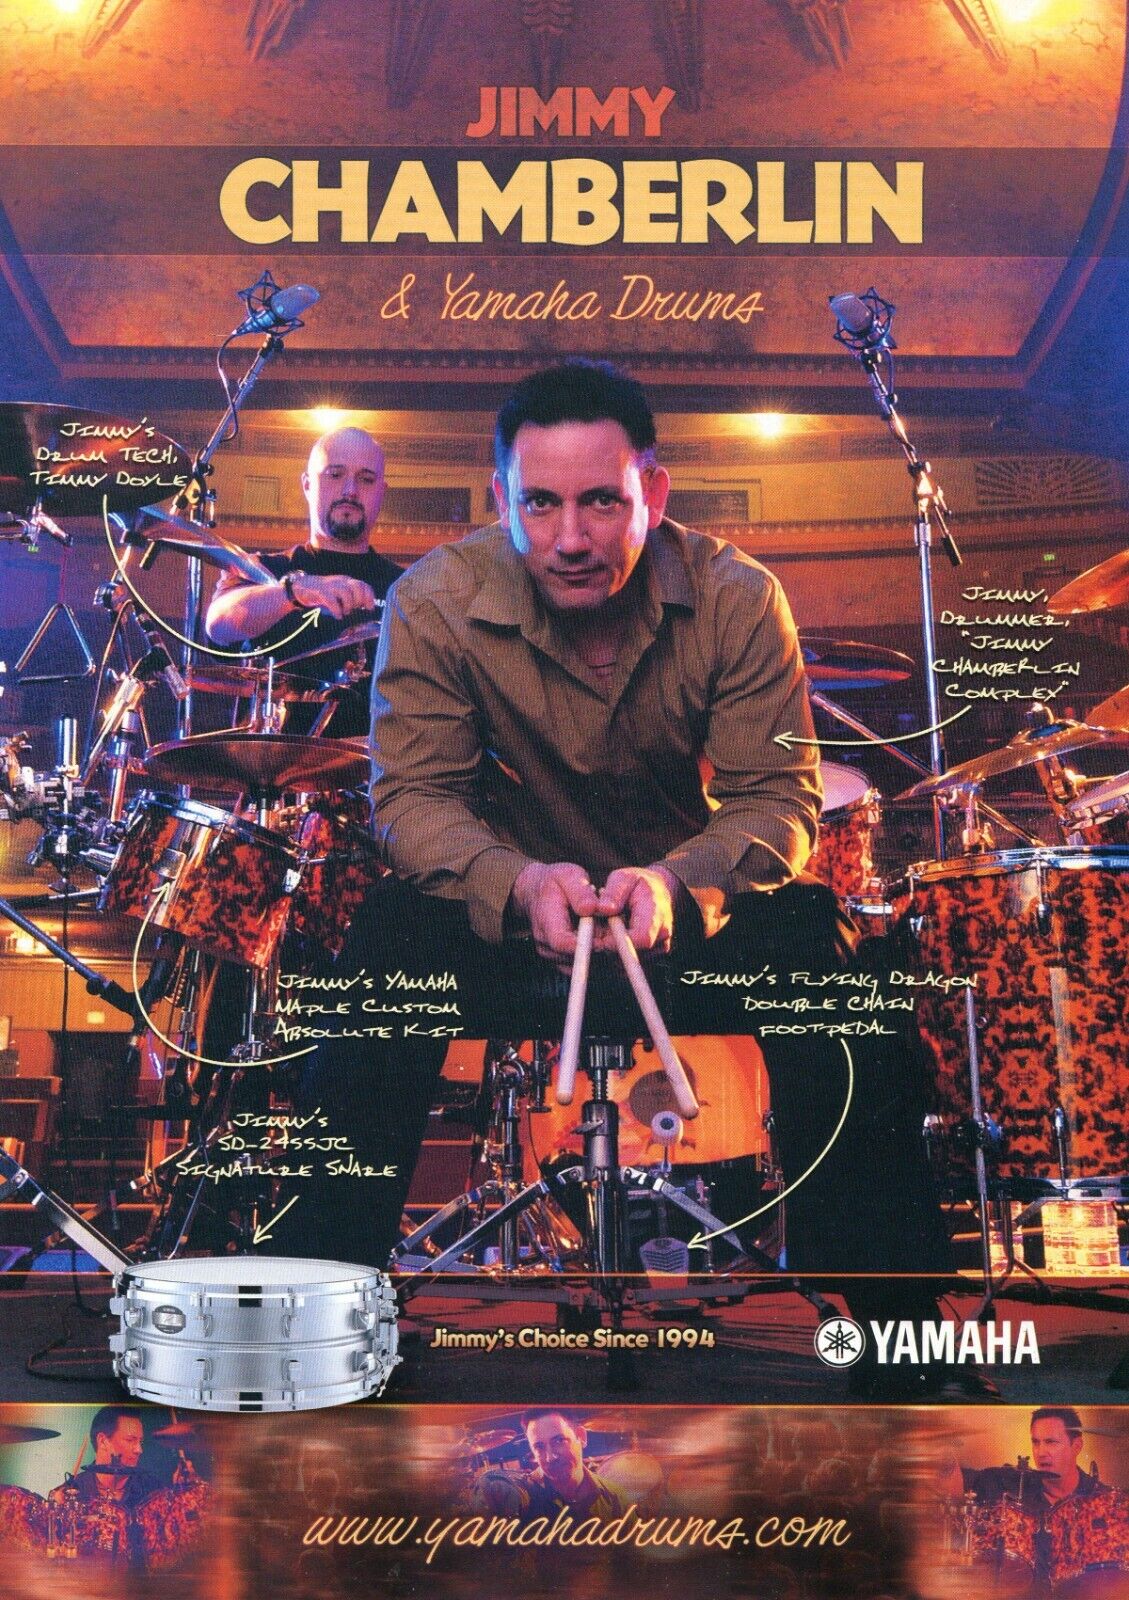 2005 Print Ad of Yamaha Maple Custom Absolute Drum Kit w Jimmy Chamberlin